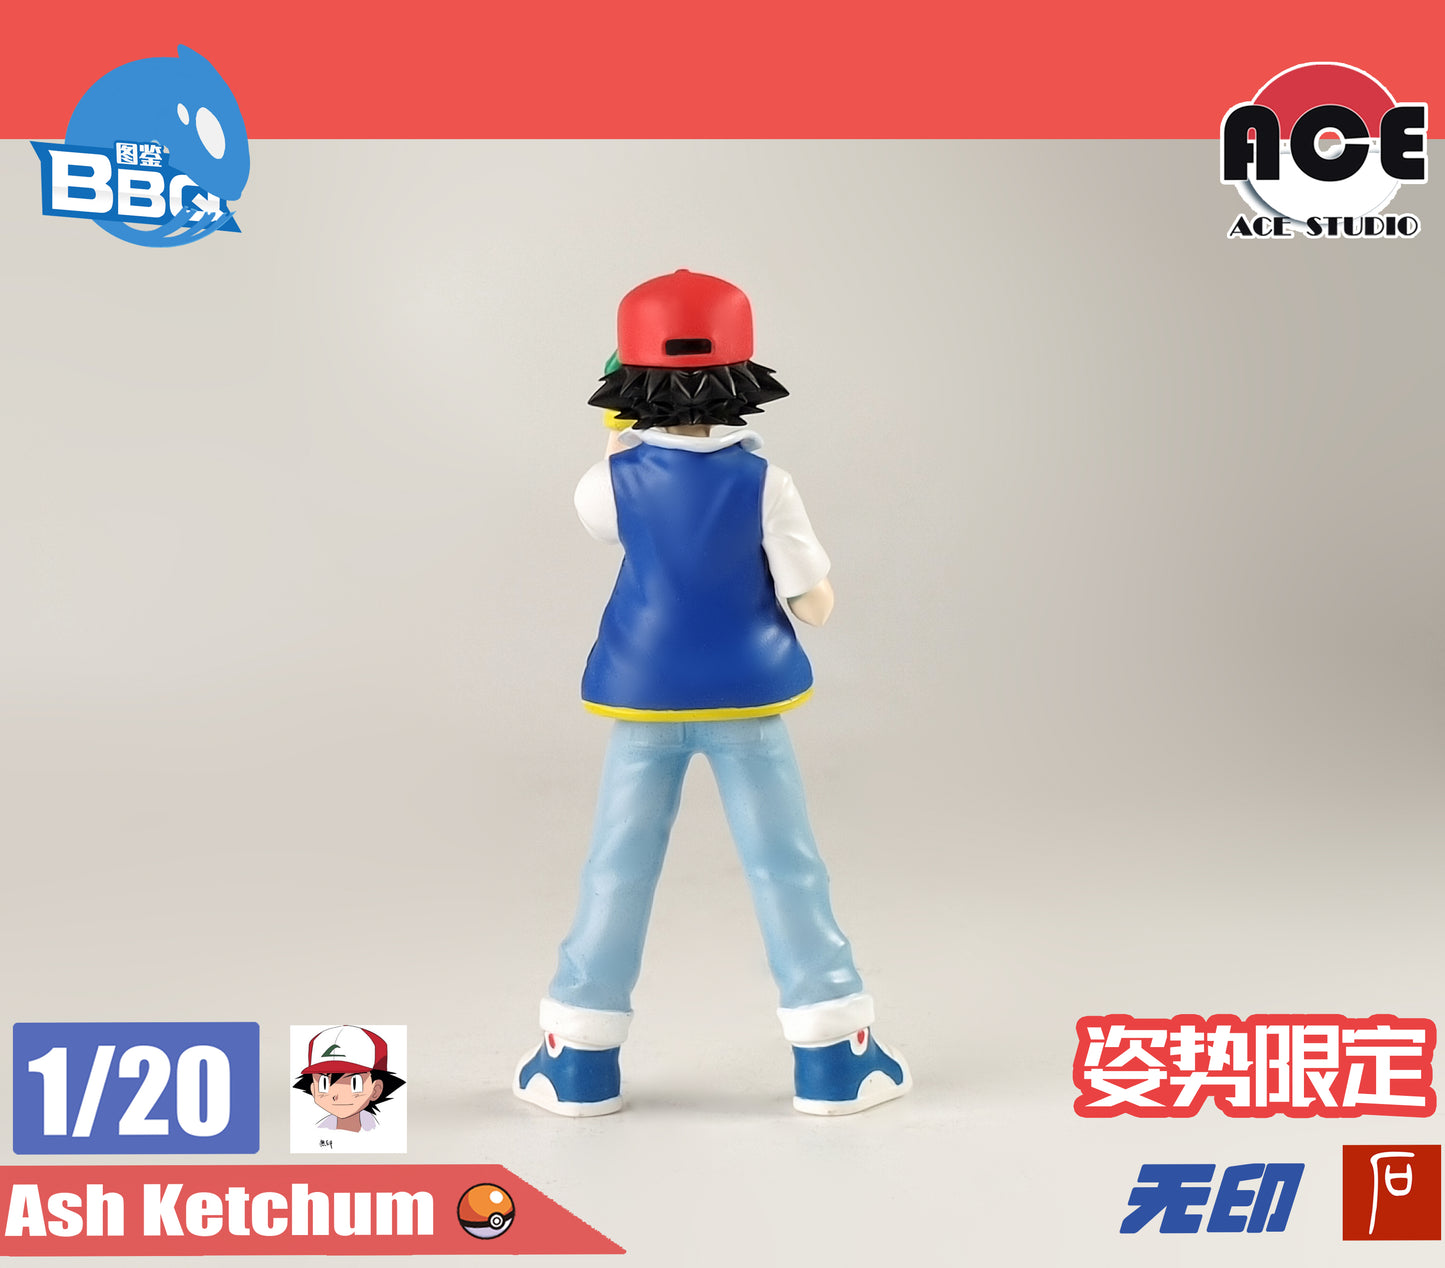 [PREORDER] 1/20 Scale World Figure [BBQ & ACE] - Ash Ketchum & Pikachu